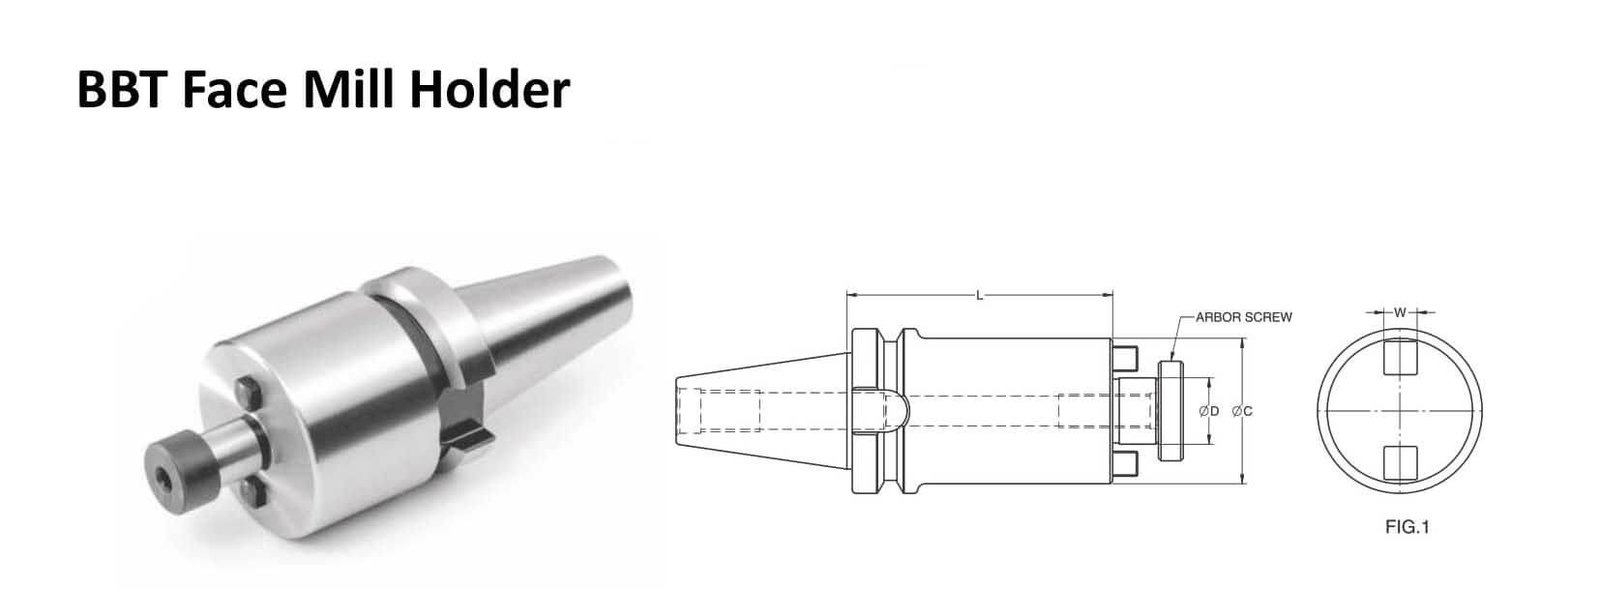 BBT40 FMH 0.750 - 4.00 Face Mill Holder (Balanced to 2.5G 25000 RPM)